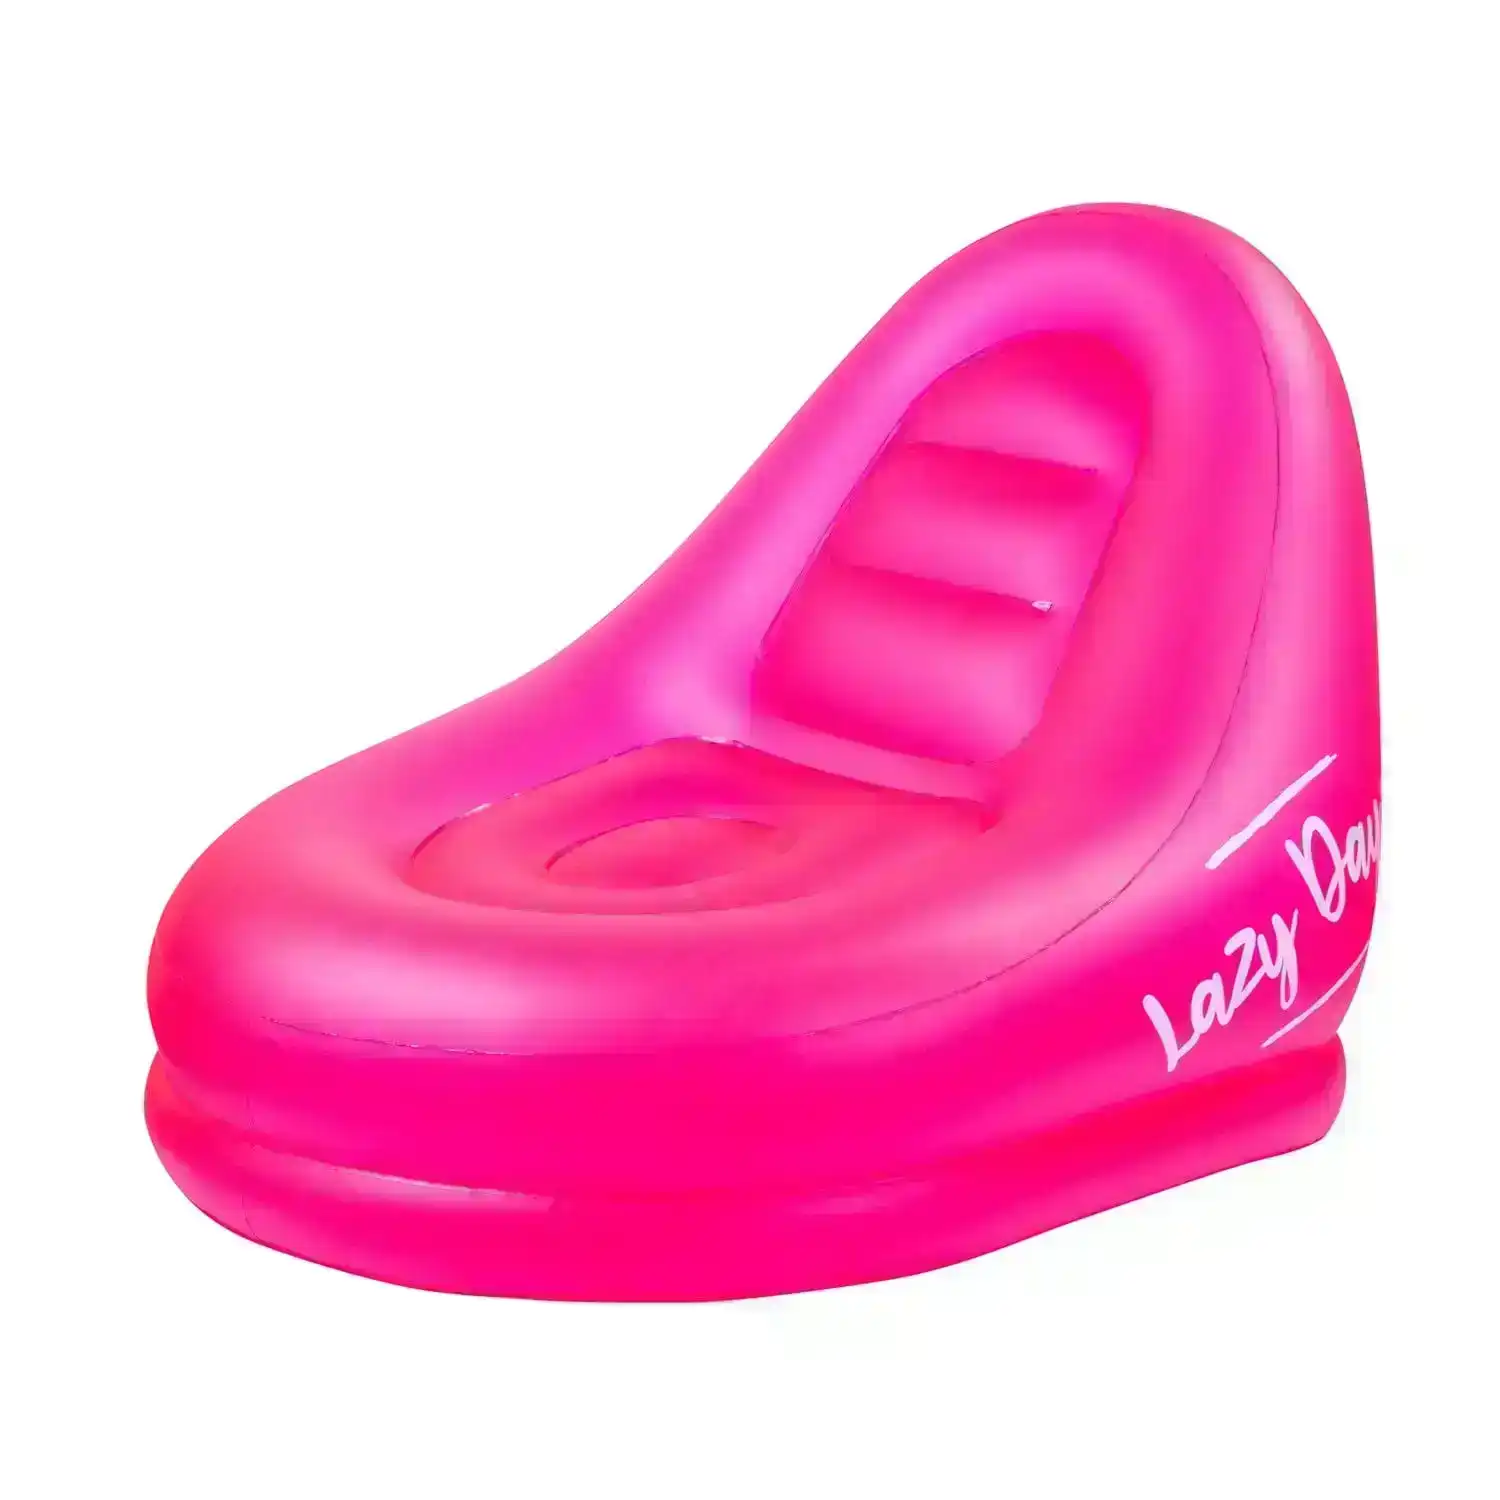 Lazy Dayz Jumbo Inflatable Chair - Pink